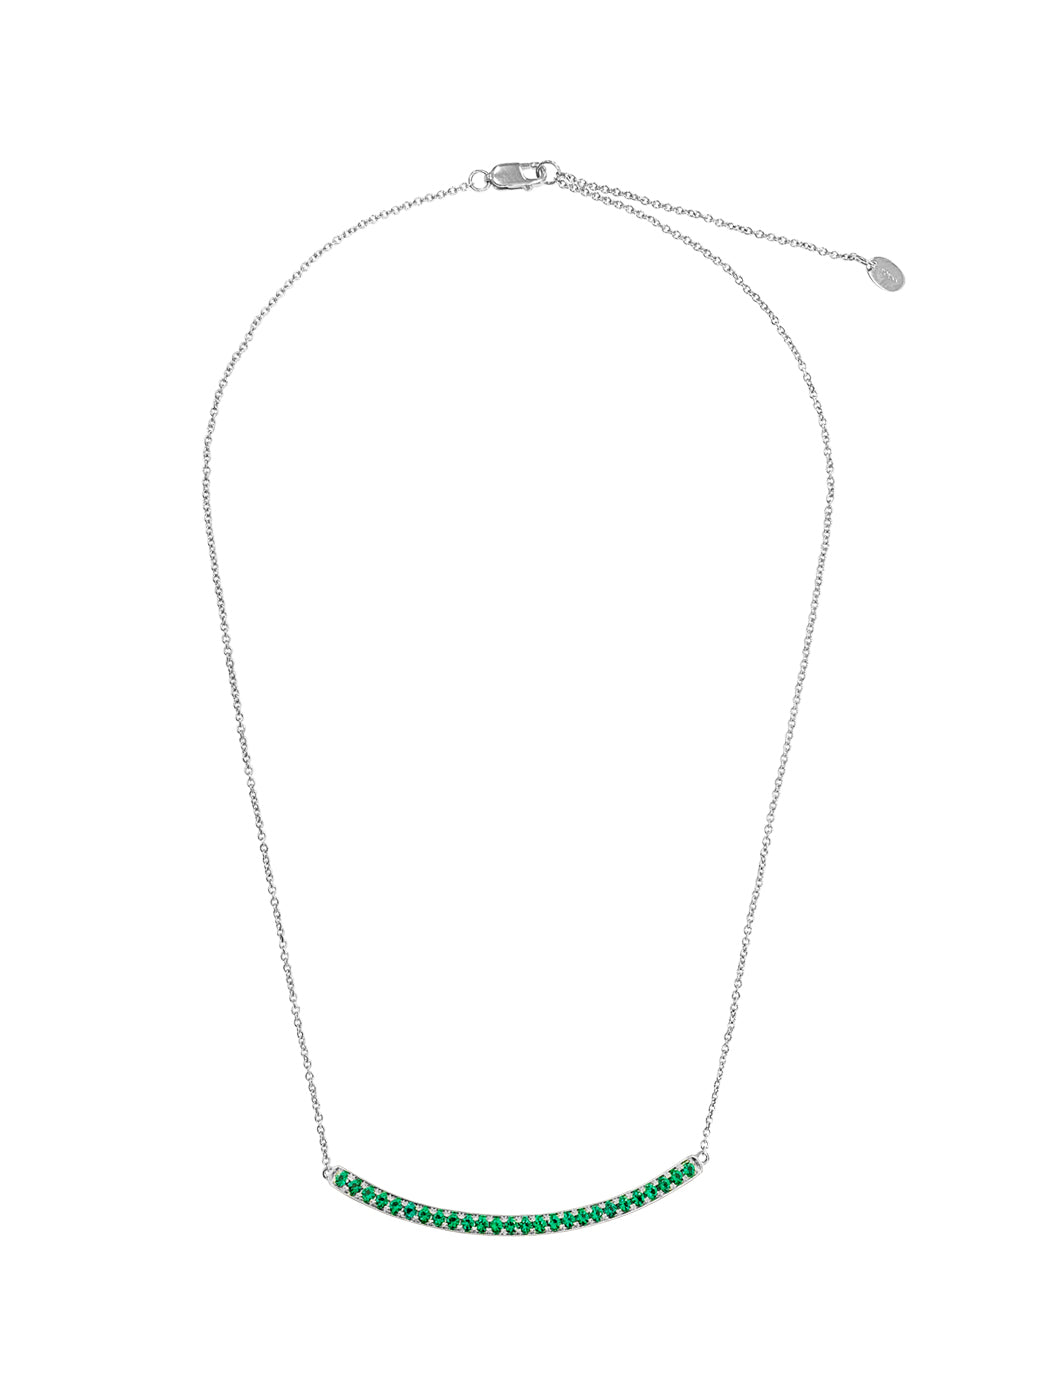 Fiorina Jewellery Arc Necklace White Gold Emerald